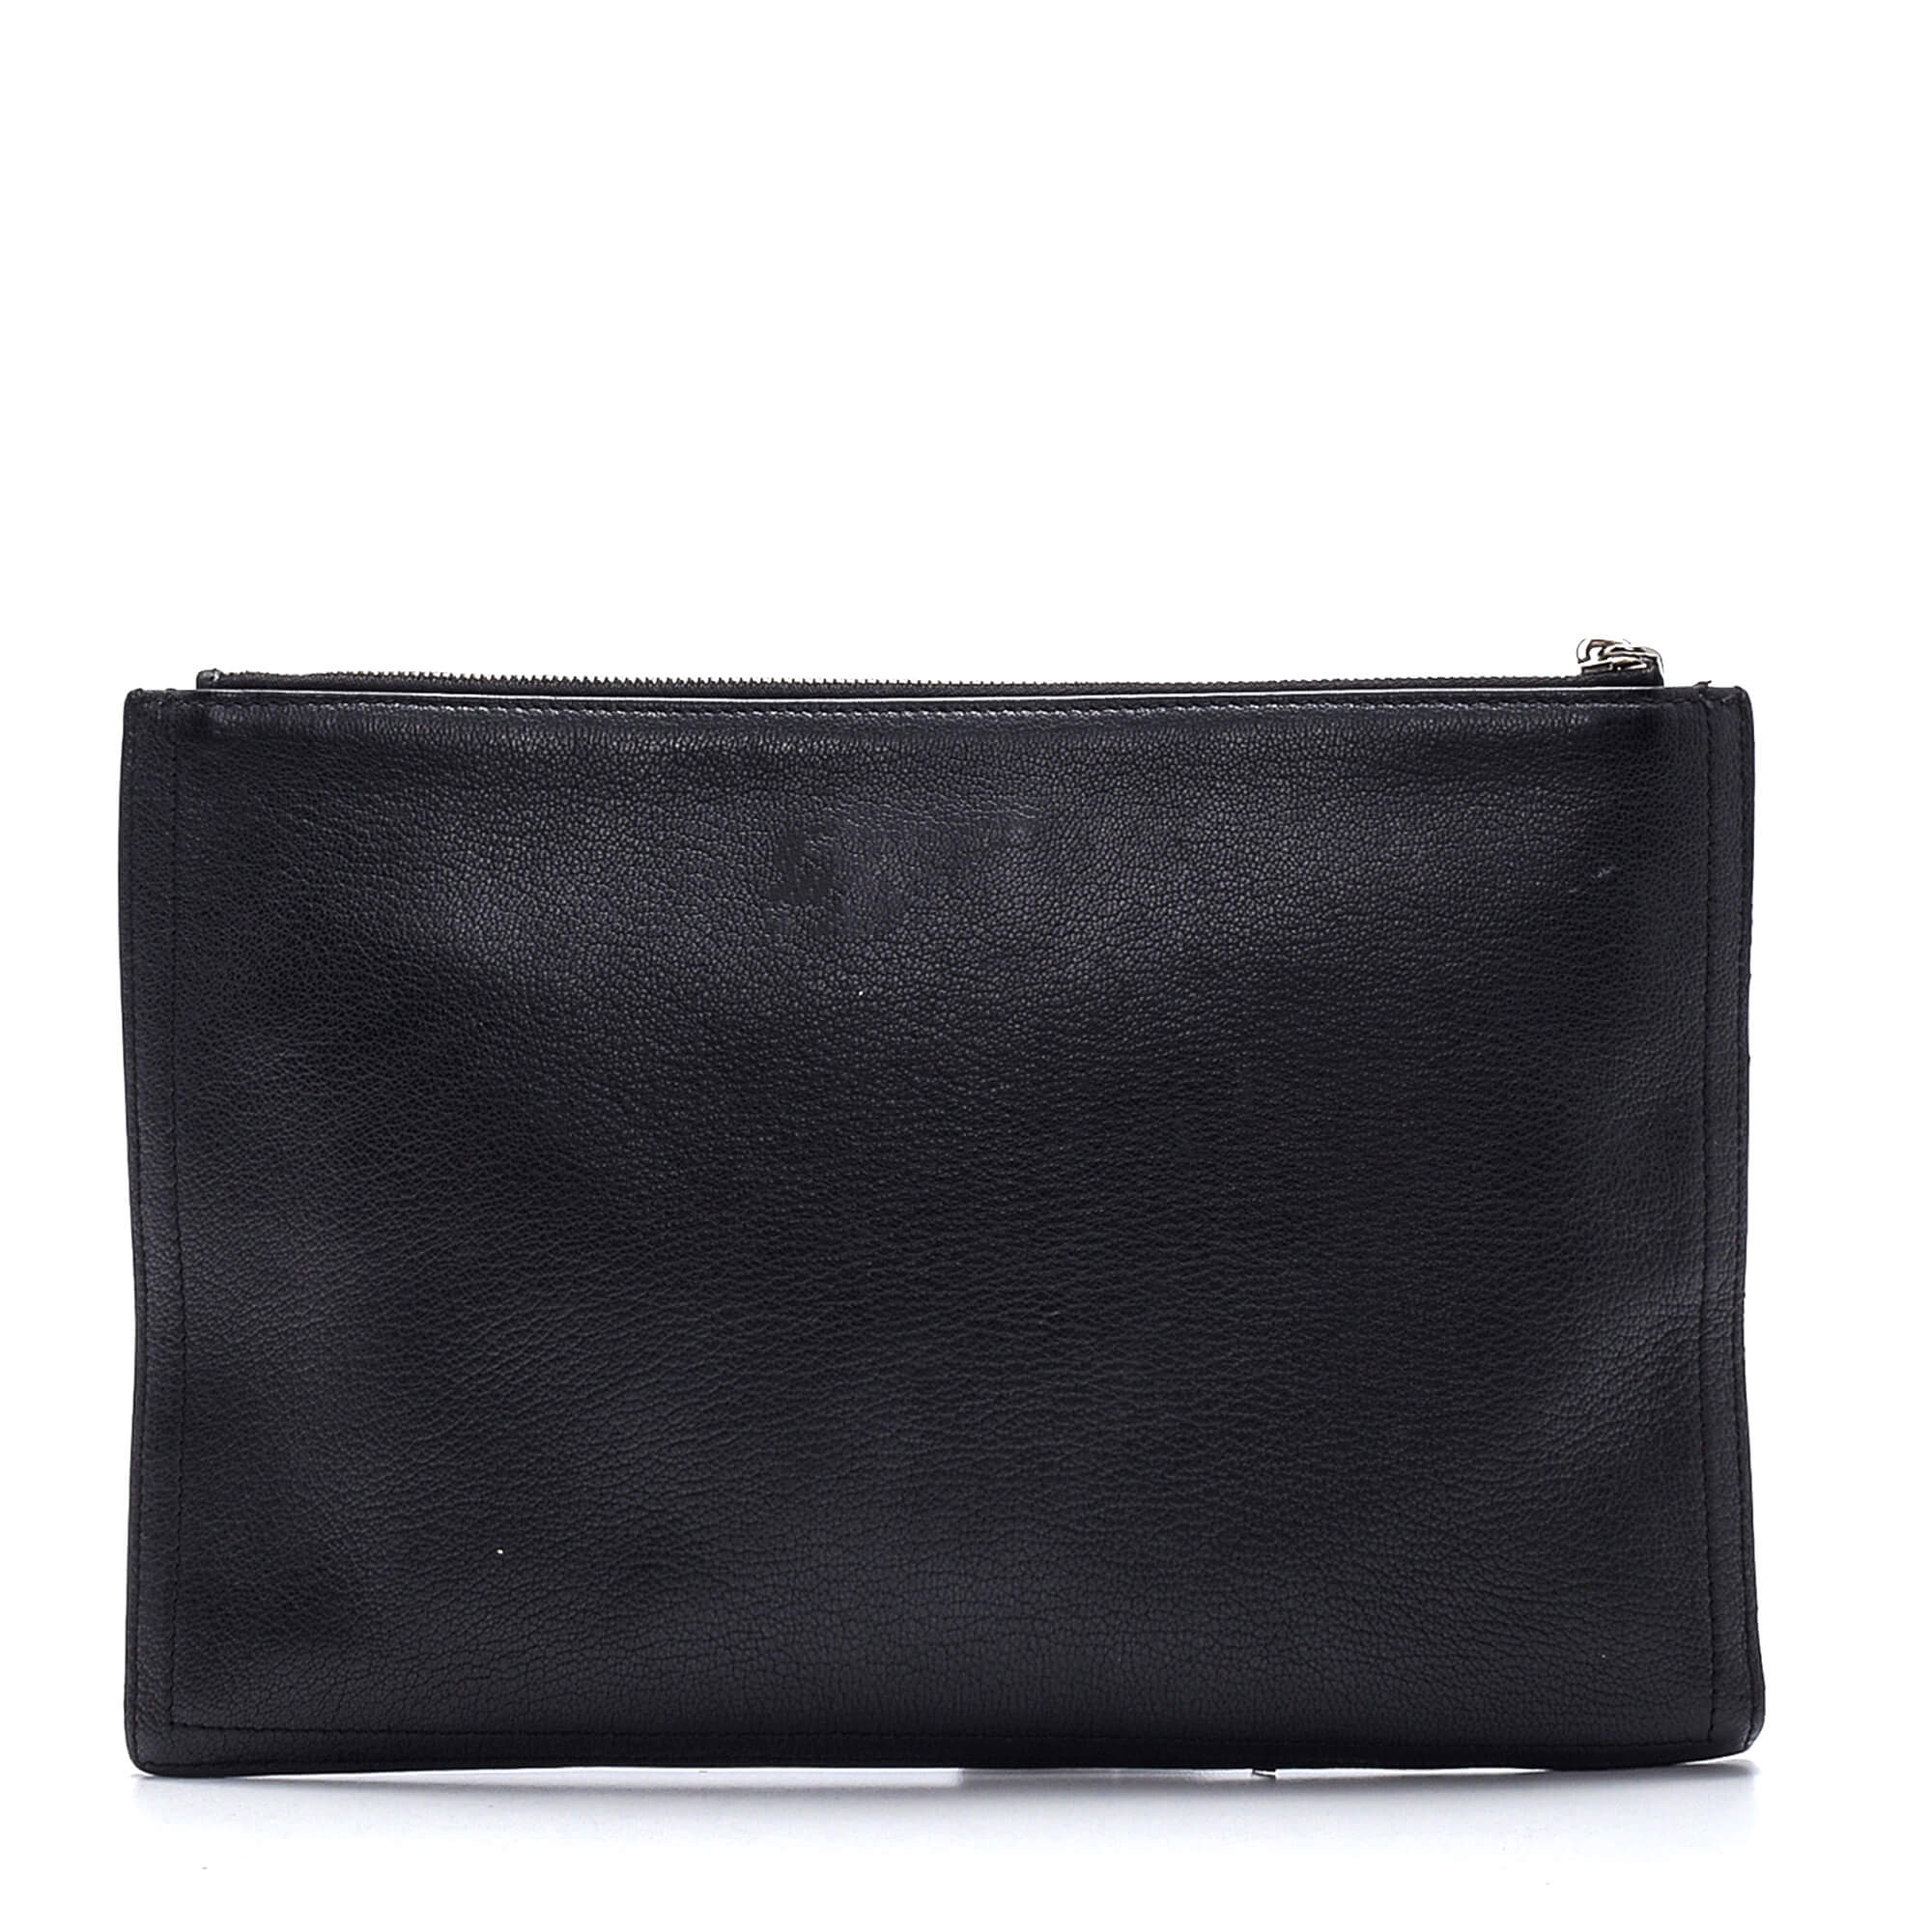 Givenchy - Black Leather Zipped Antigona Clutch 